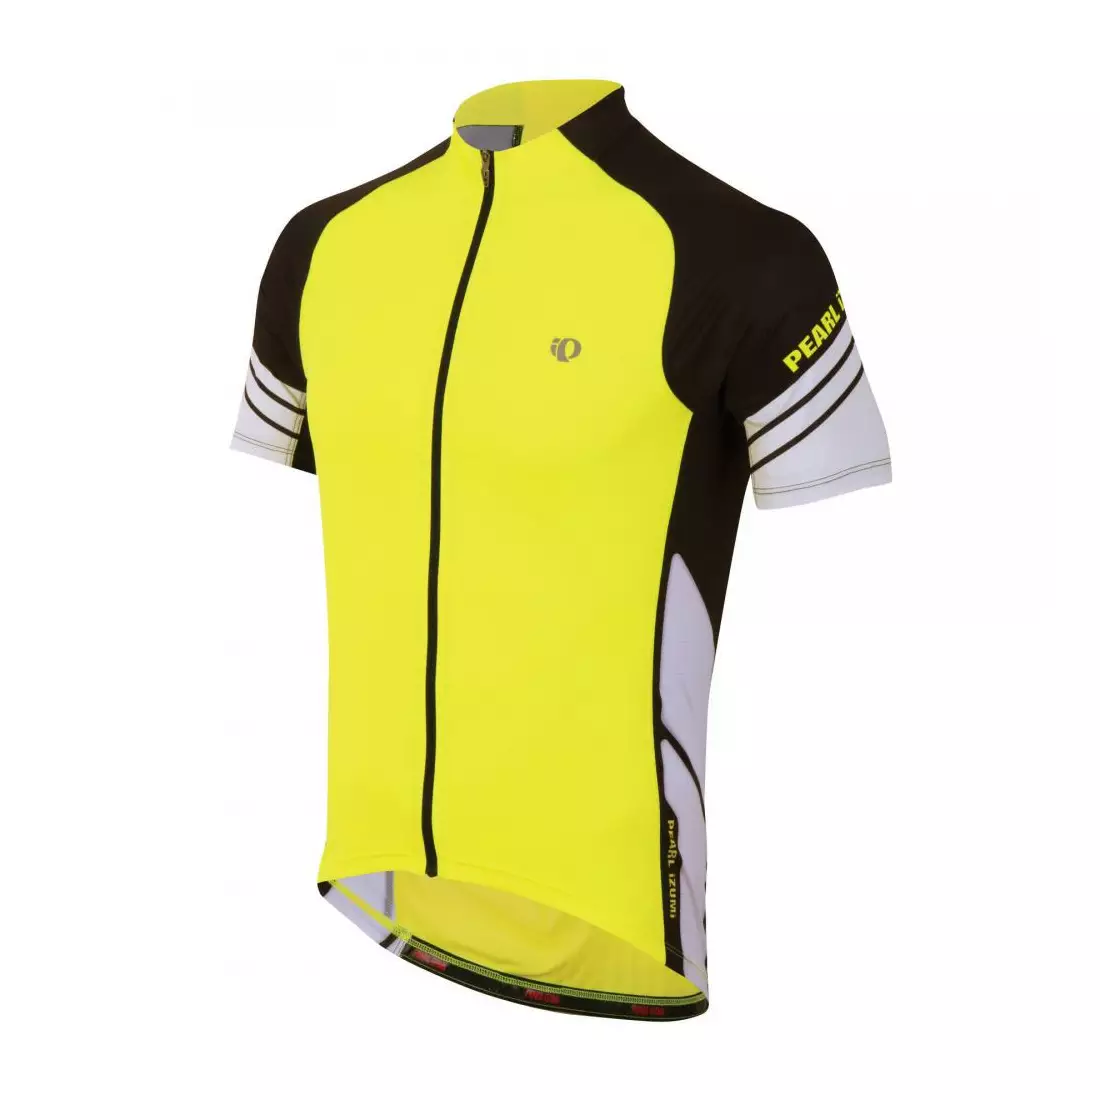 PEARL IZUMI - ELITE 11121301-429 - light cycling jersey, color: Fluoro-black